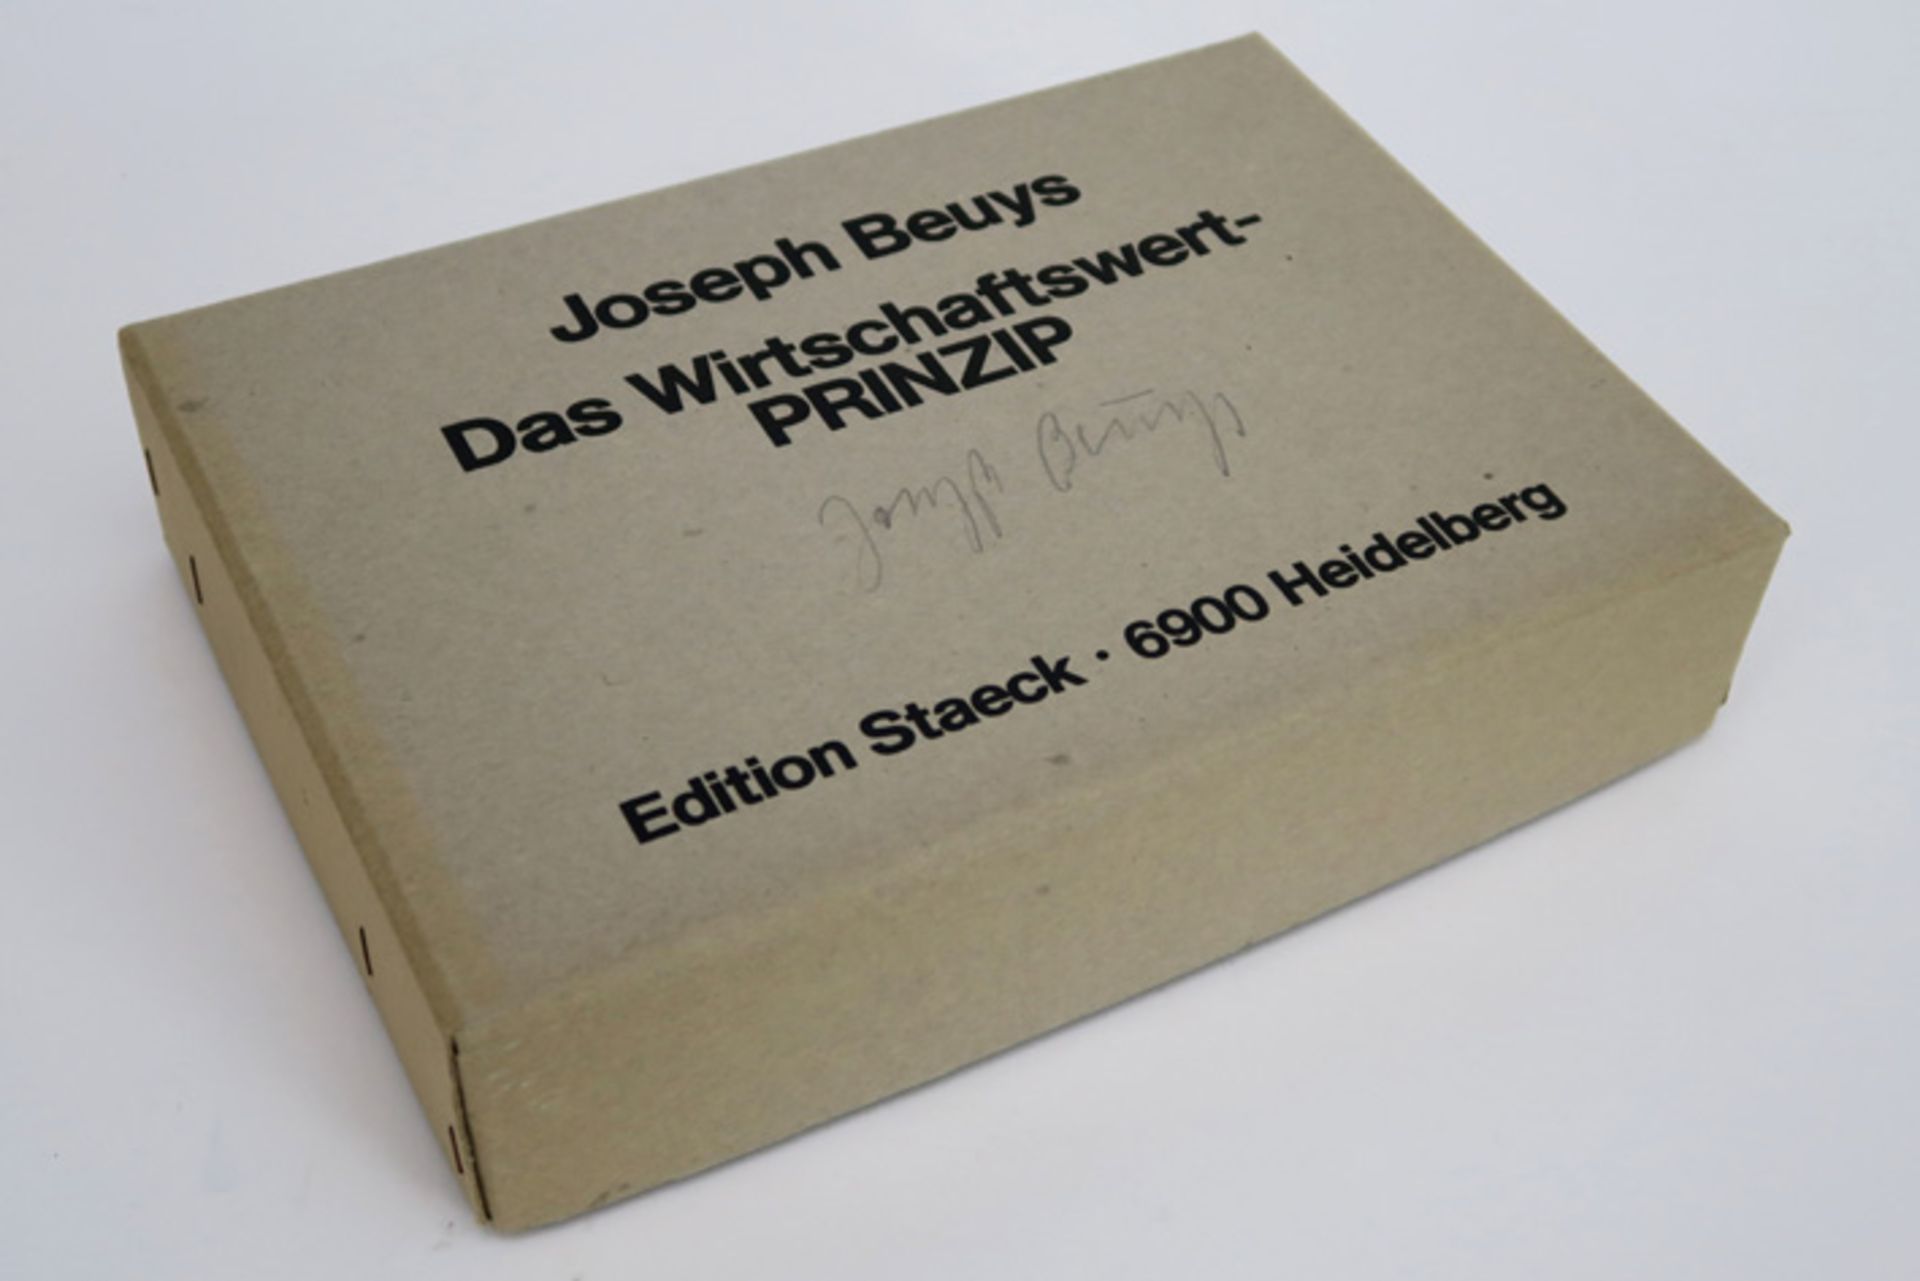 BEUYS JOSEPH (1921 - 1986) uniek werk uit "Das Wirtschaftwert Prinzip" dd 1976 - 1984 : een